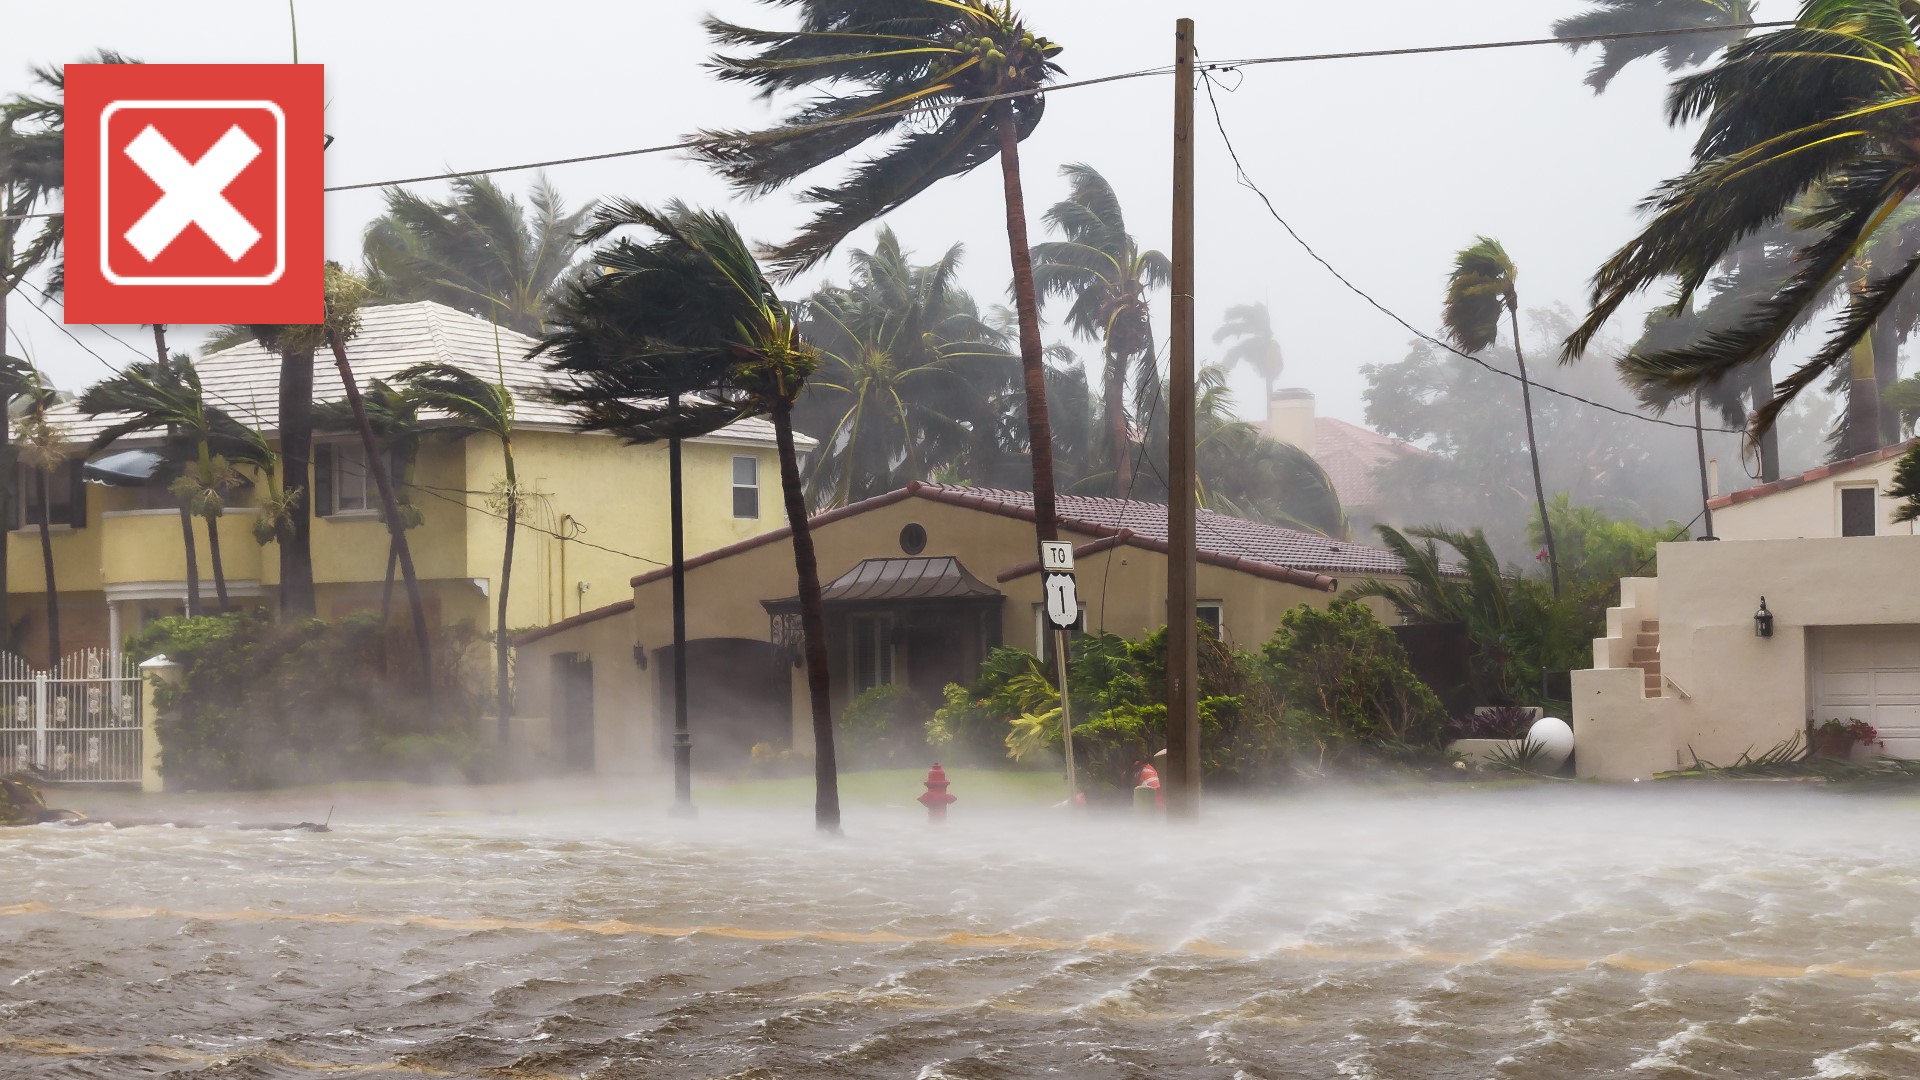 Category 6 hurricane isn't coming to Florida, Carolinas